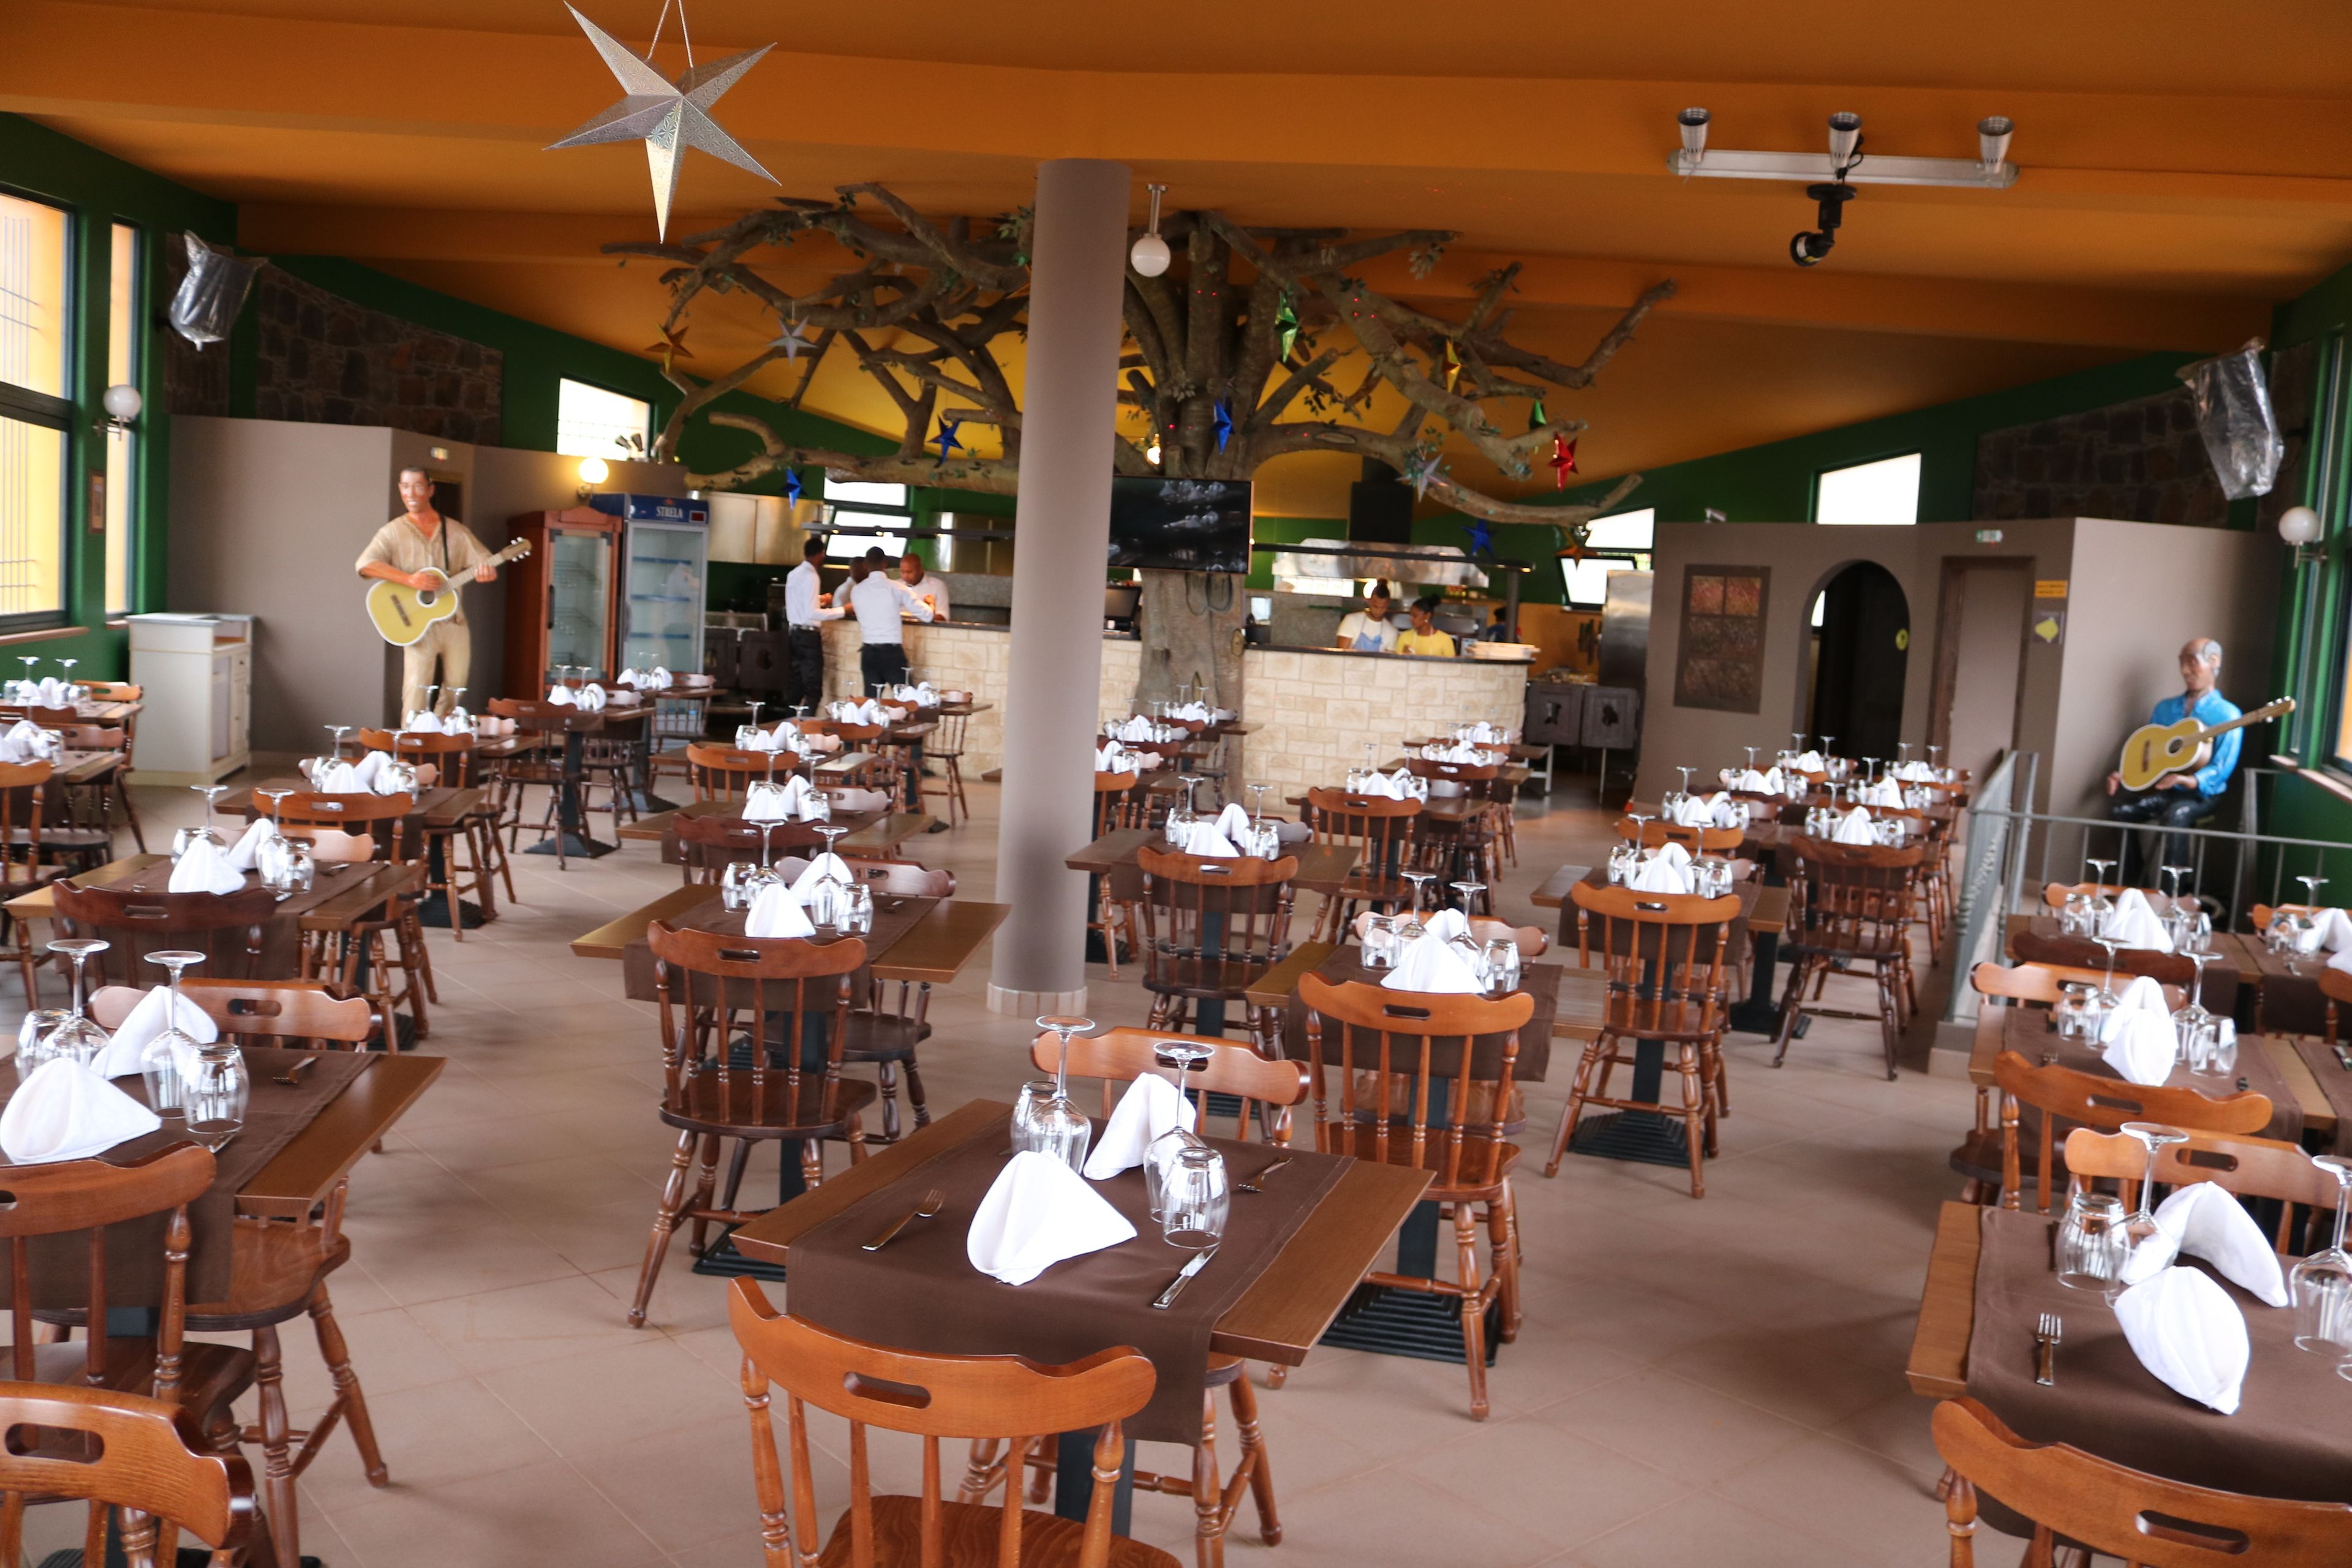 The Pombas Brancas Resort